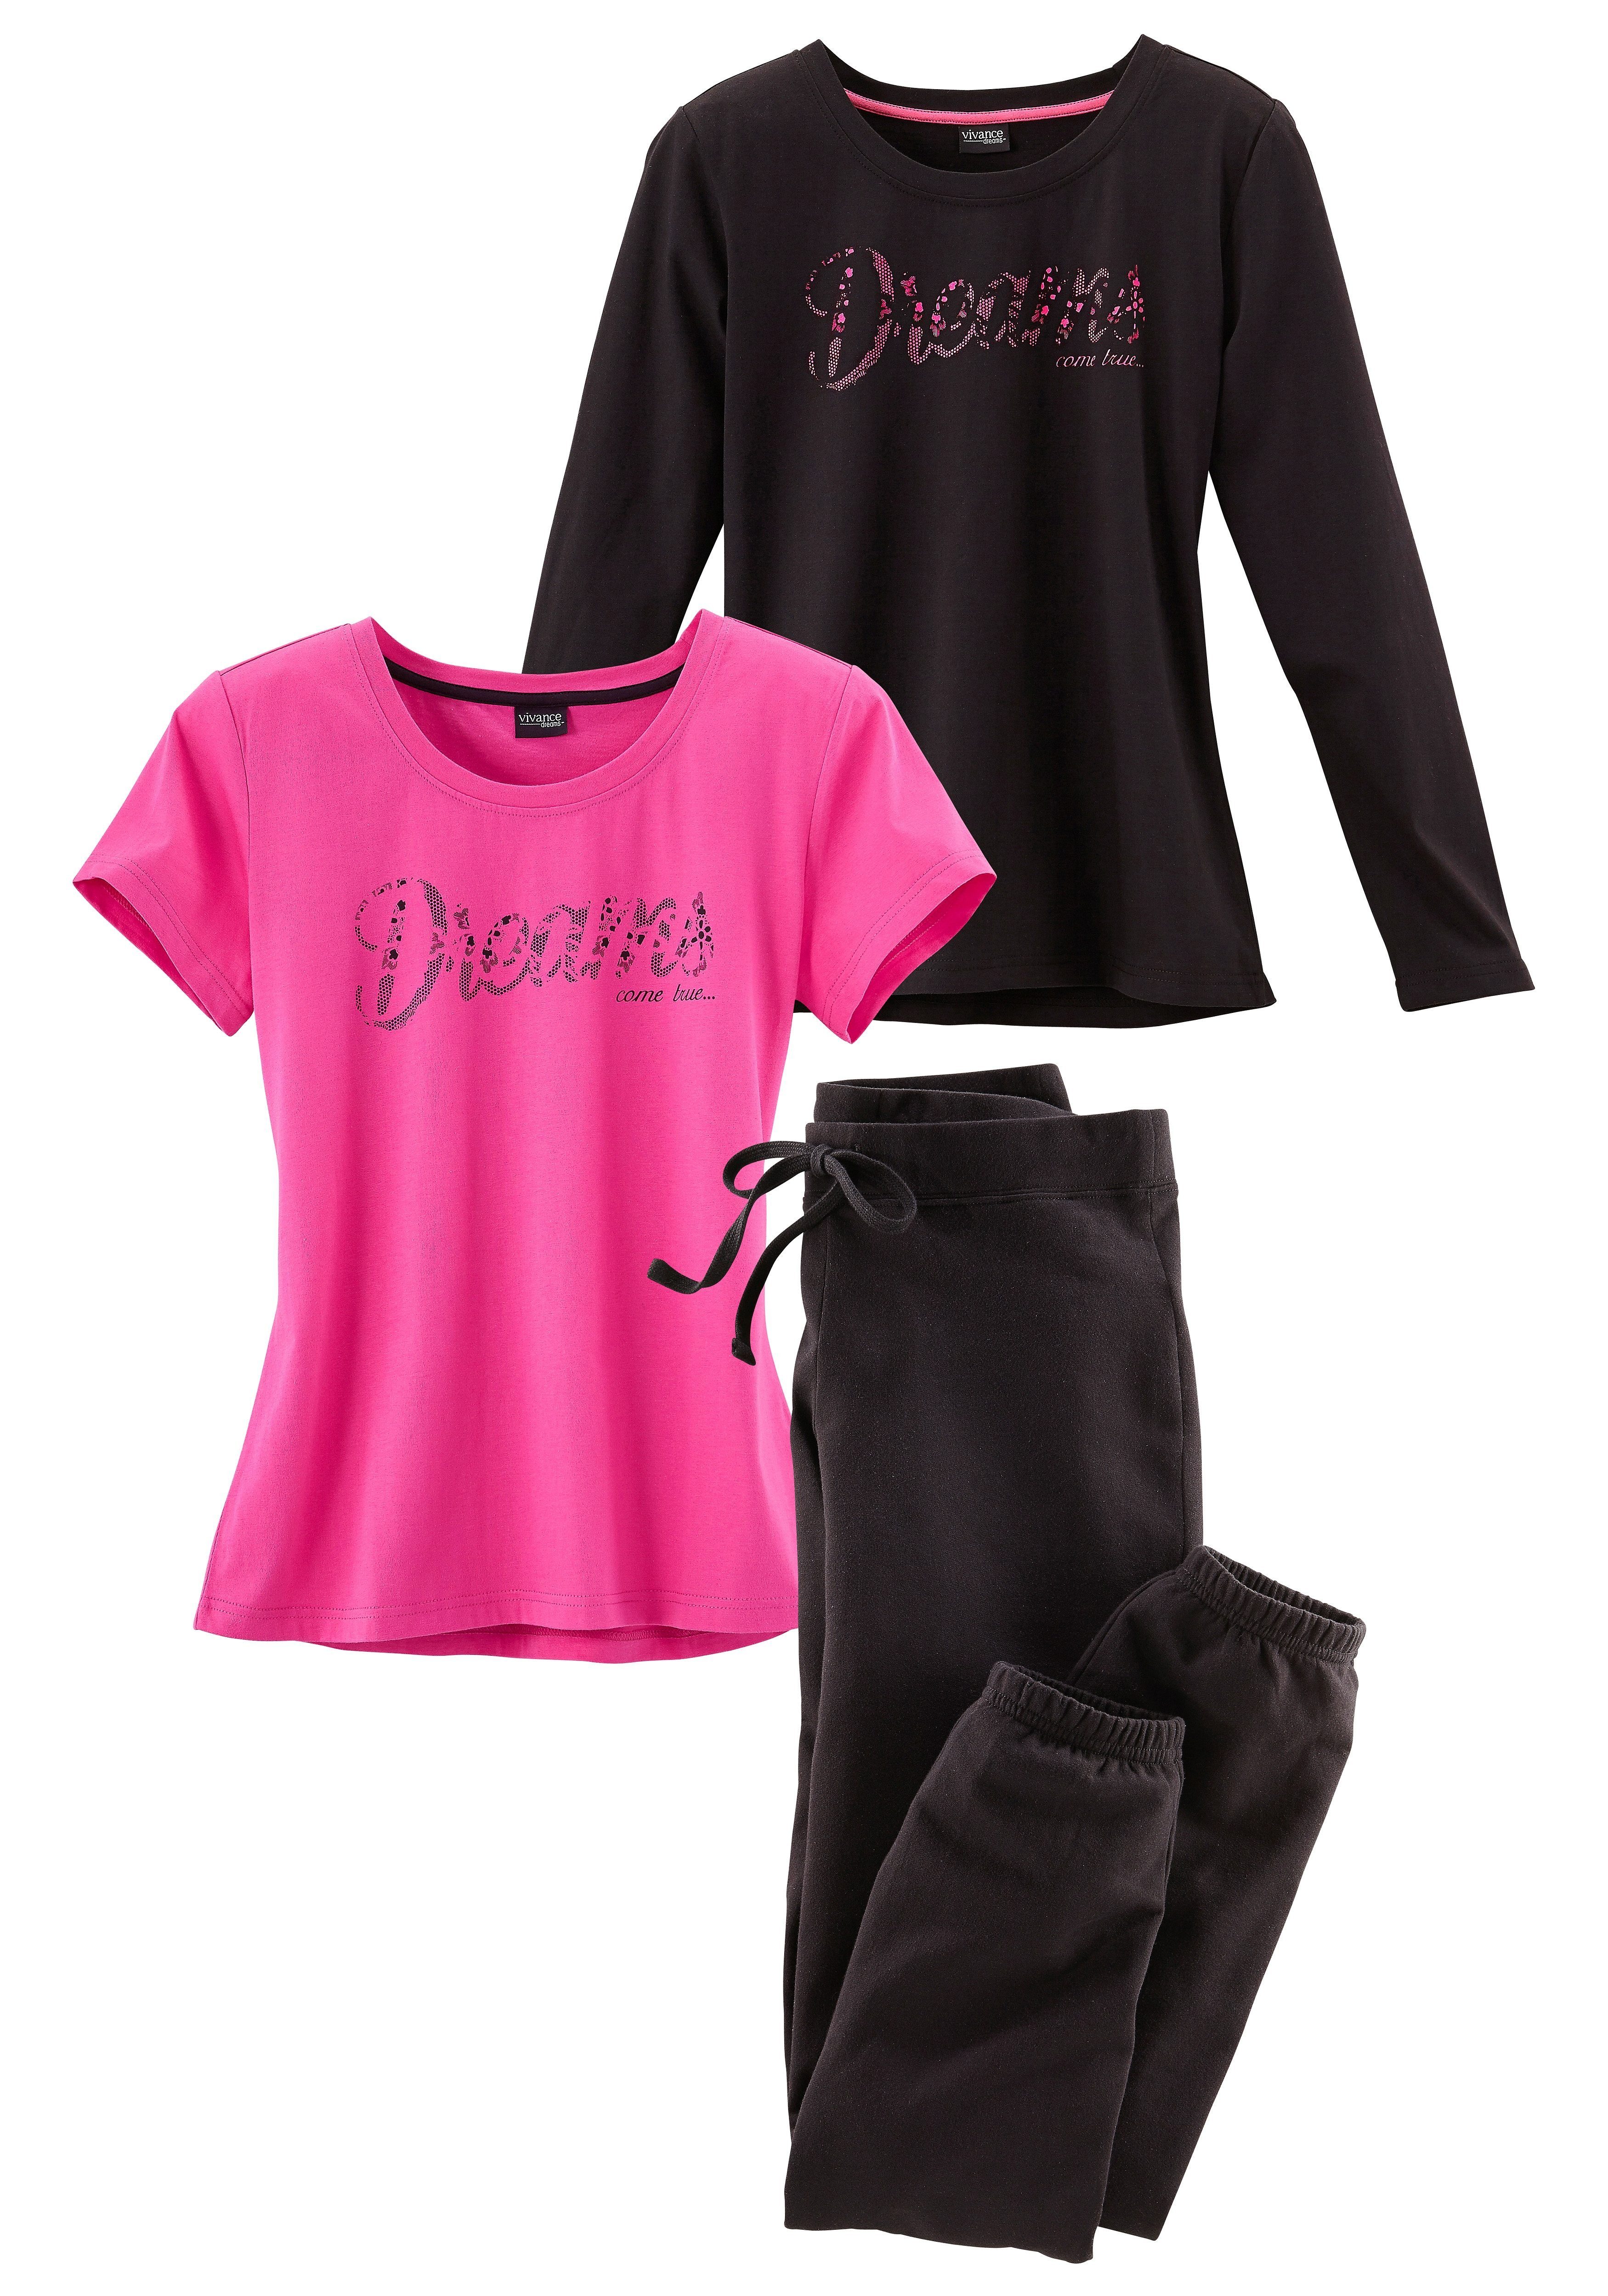 tlg) Pyjama Vivance pink-schwarz Dreams mit 3 Frontschriftzug (Set,